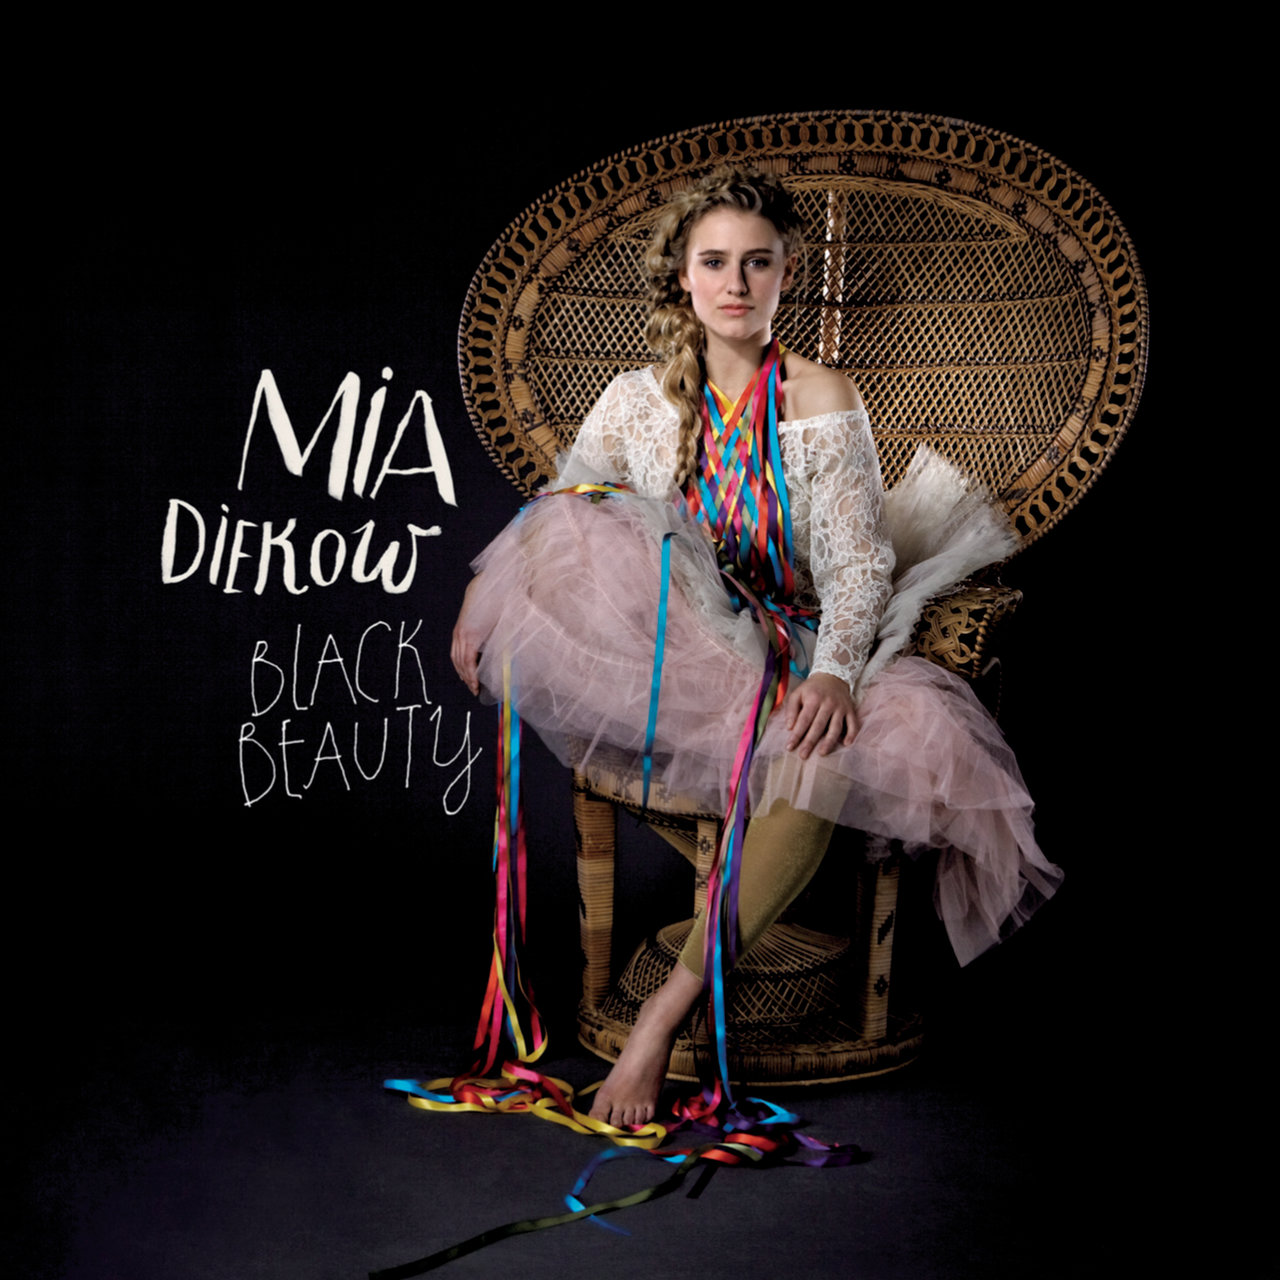 Mia Diekow Black Beauty cover artwork